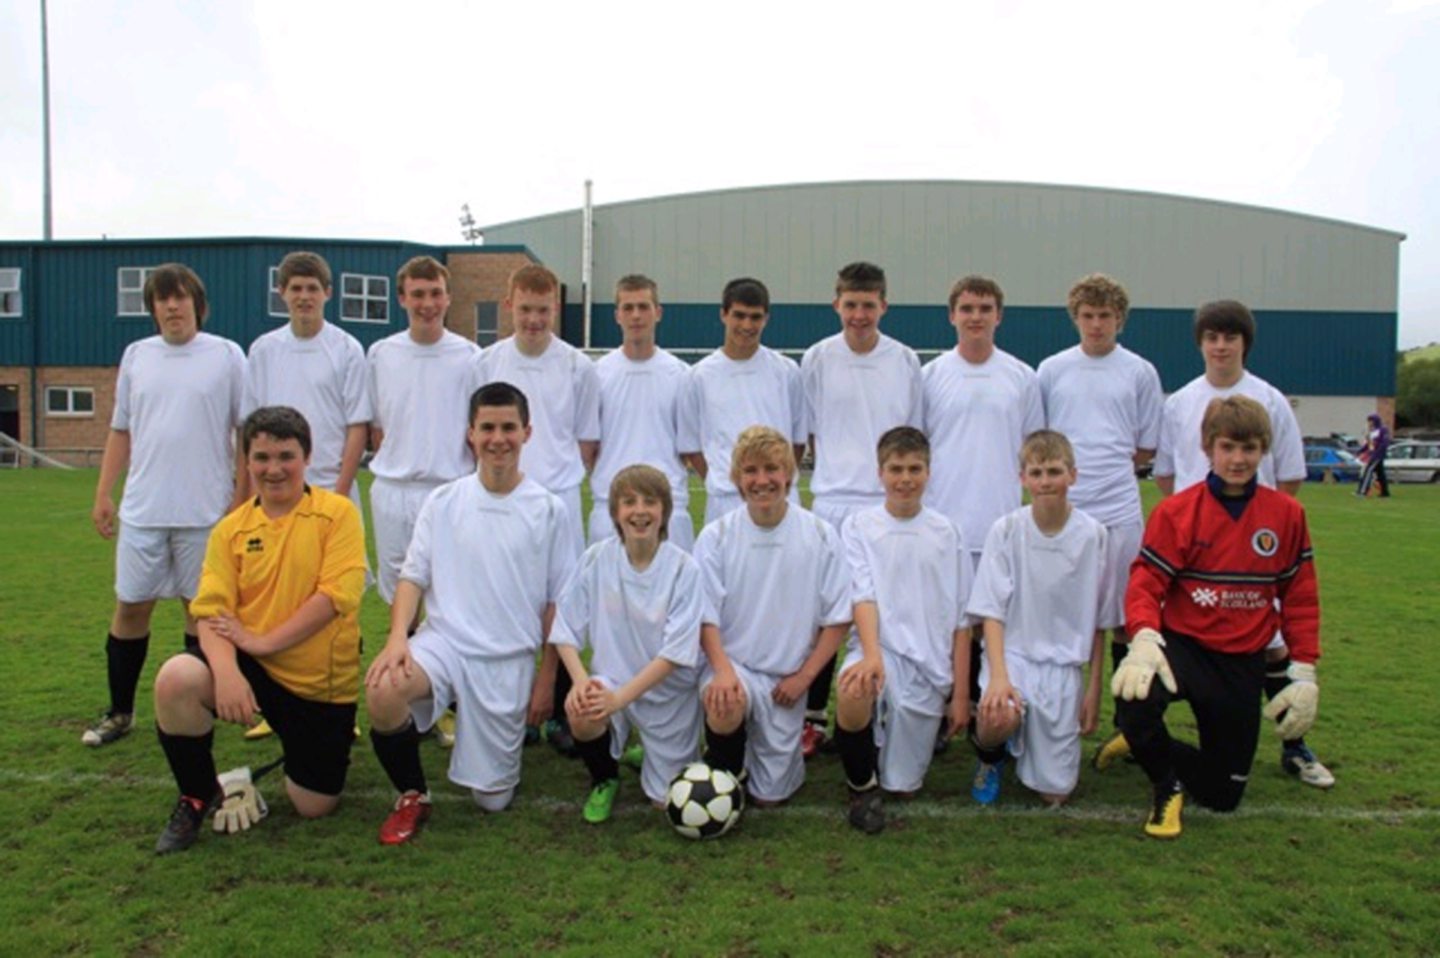 The school's football team 